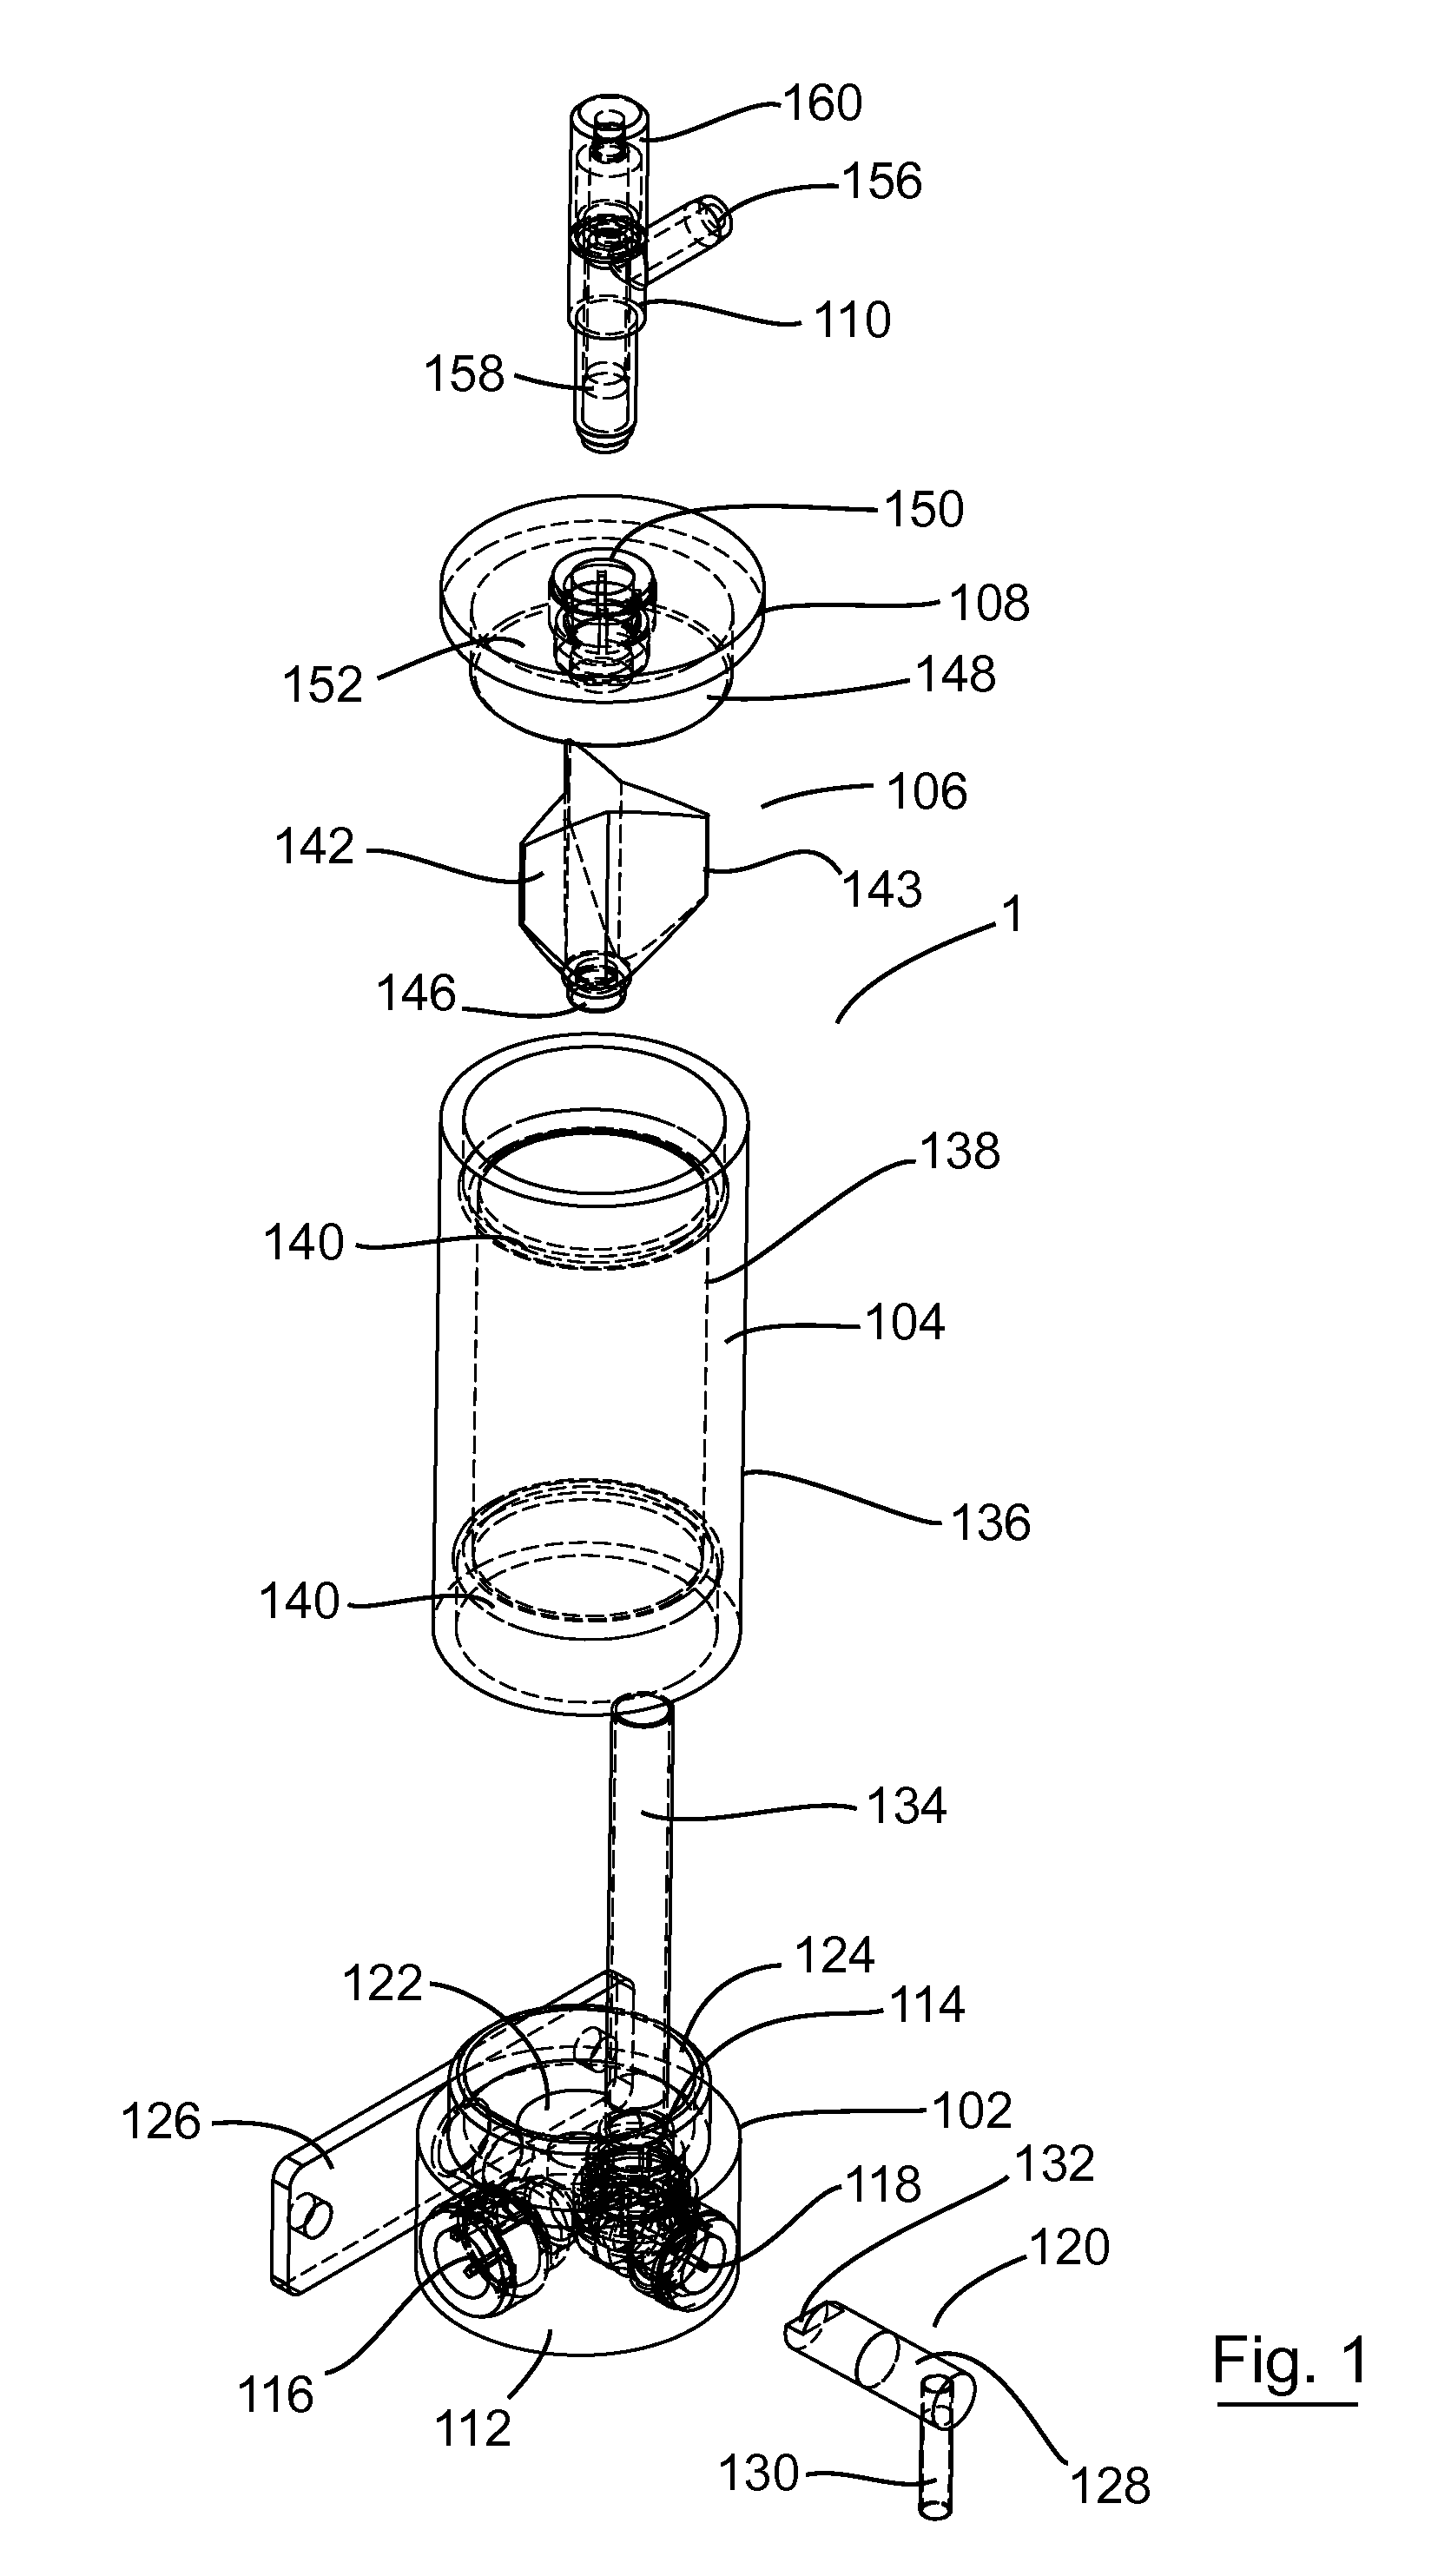 A flow control device